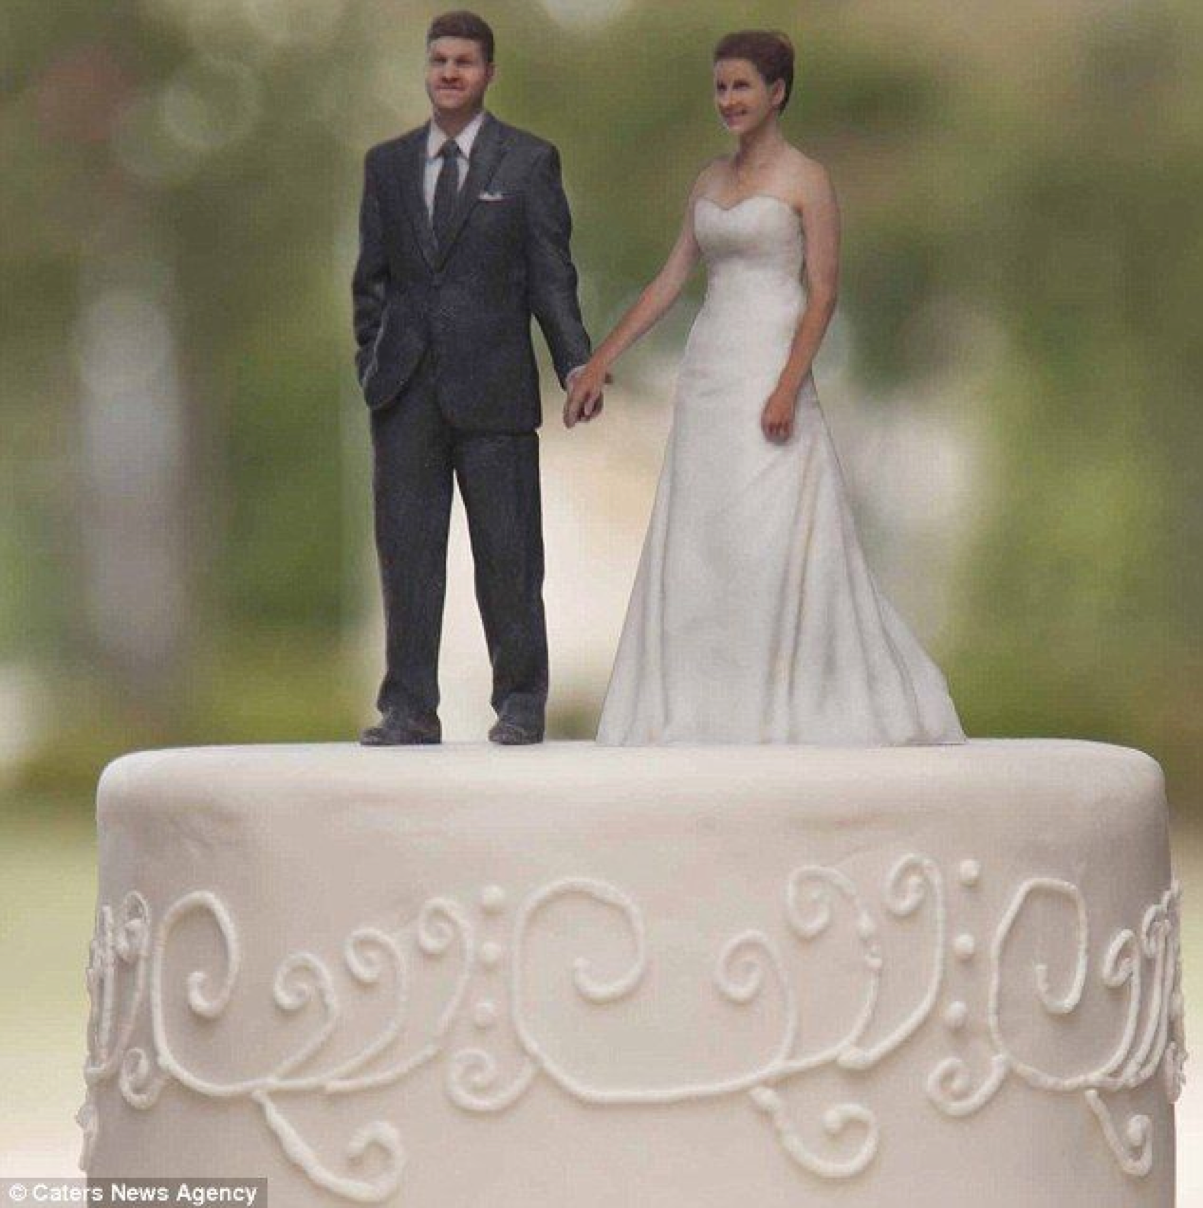 3D wedding cake topper